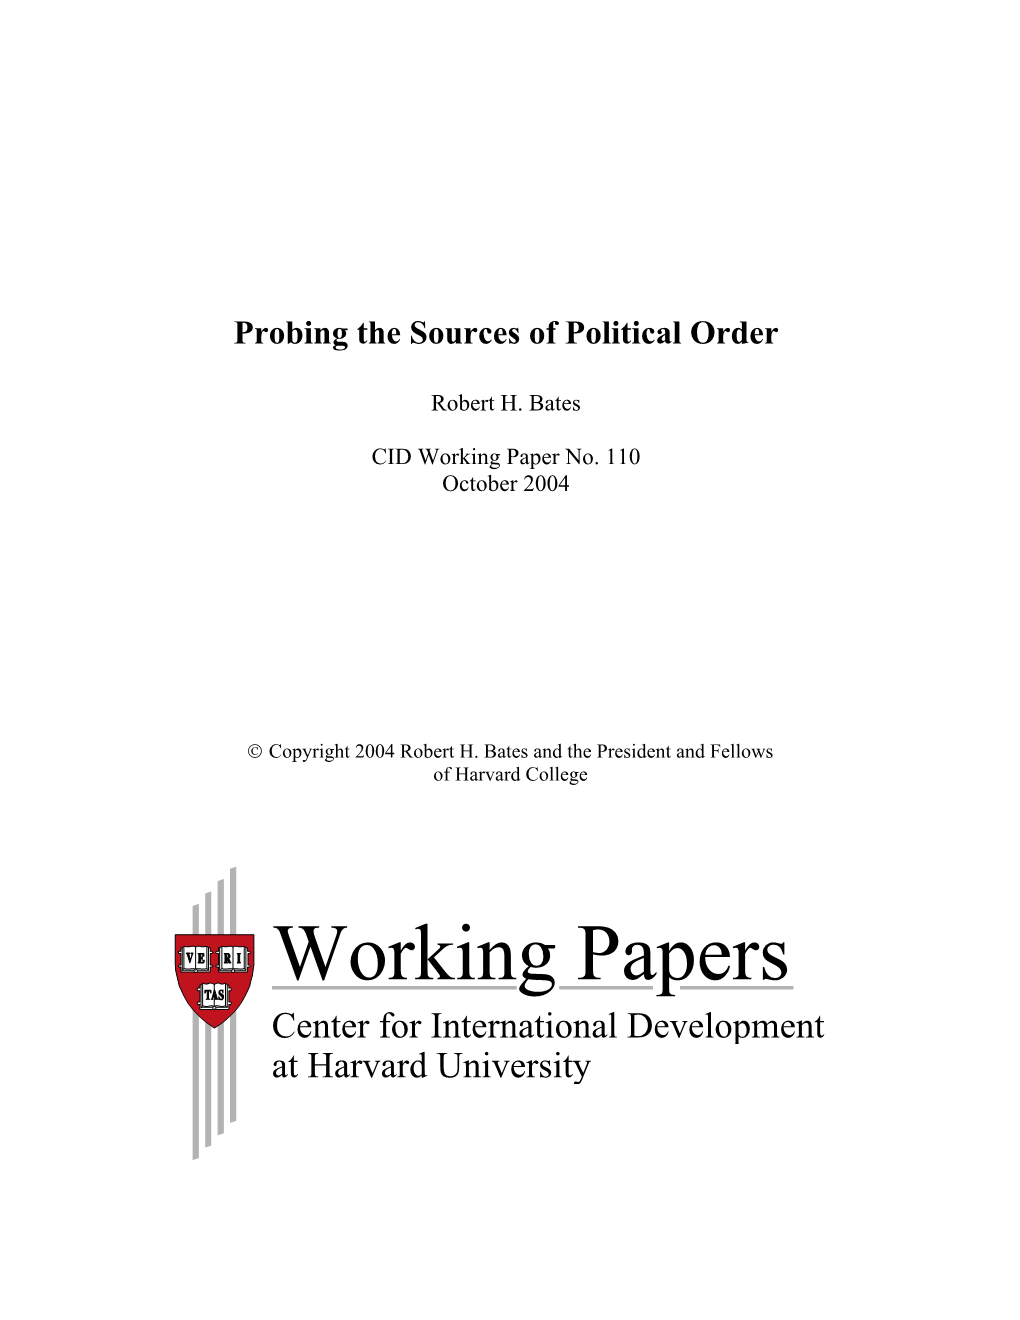 CID Working Paper No. 110 October 2004